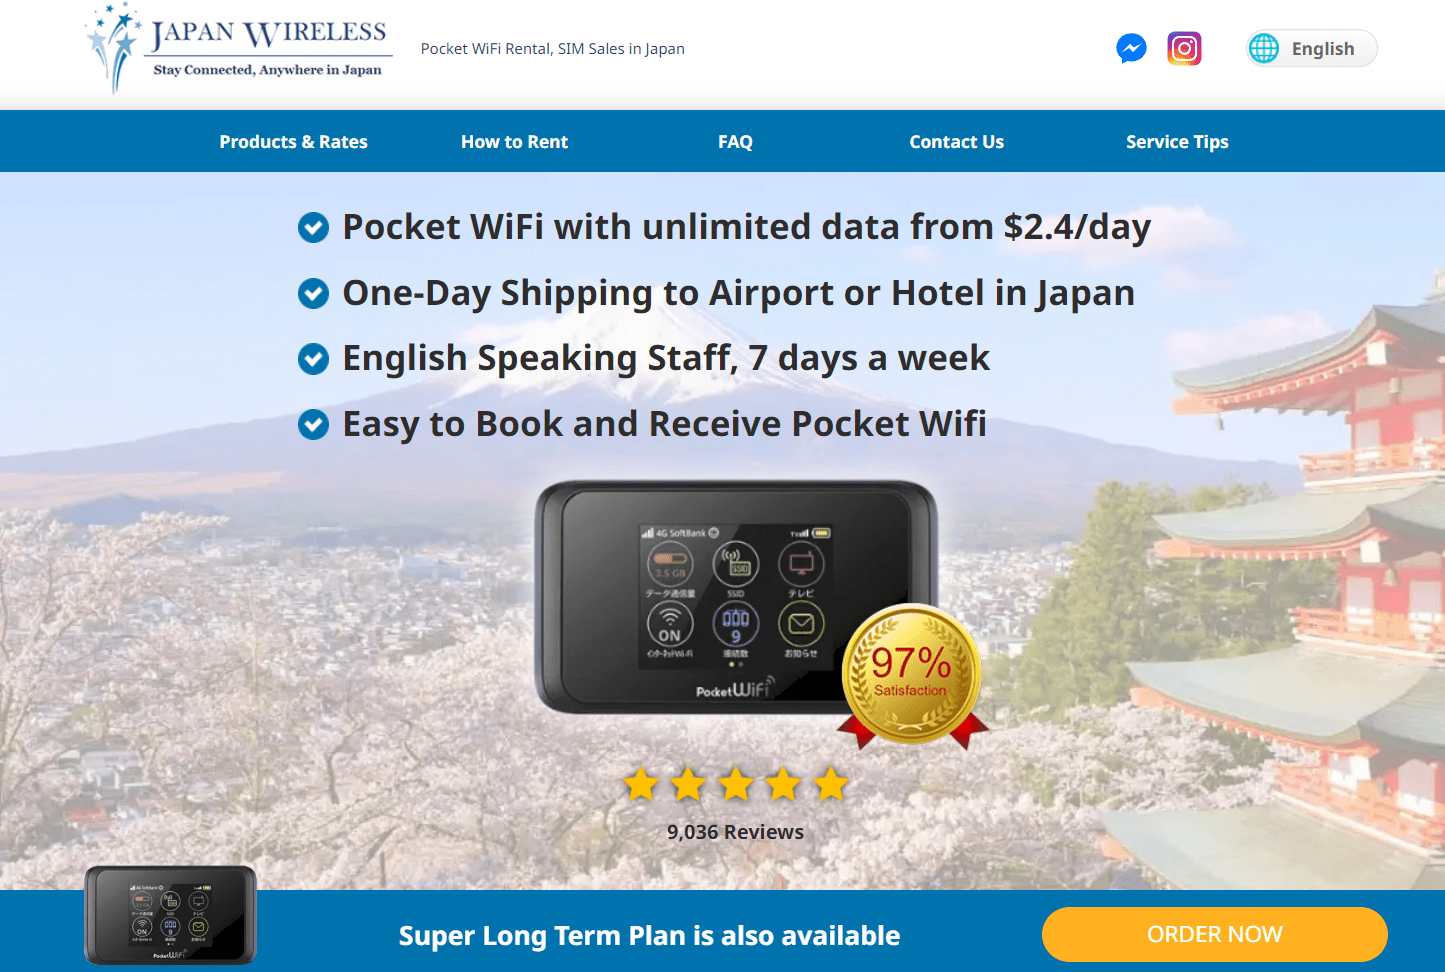 Japan Wireless site